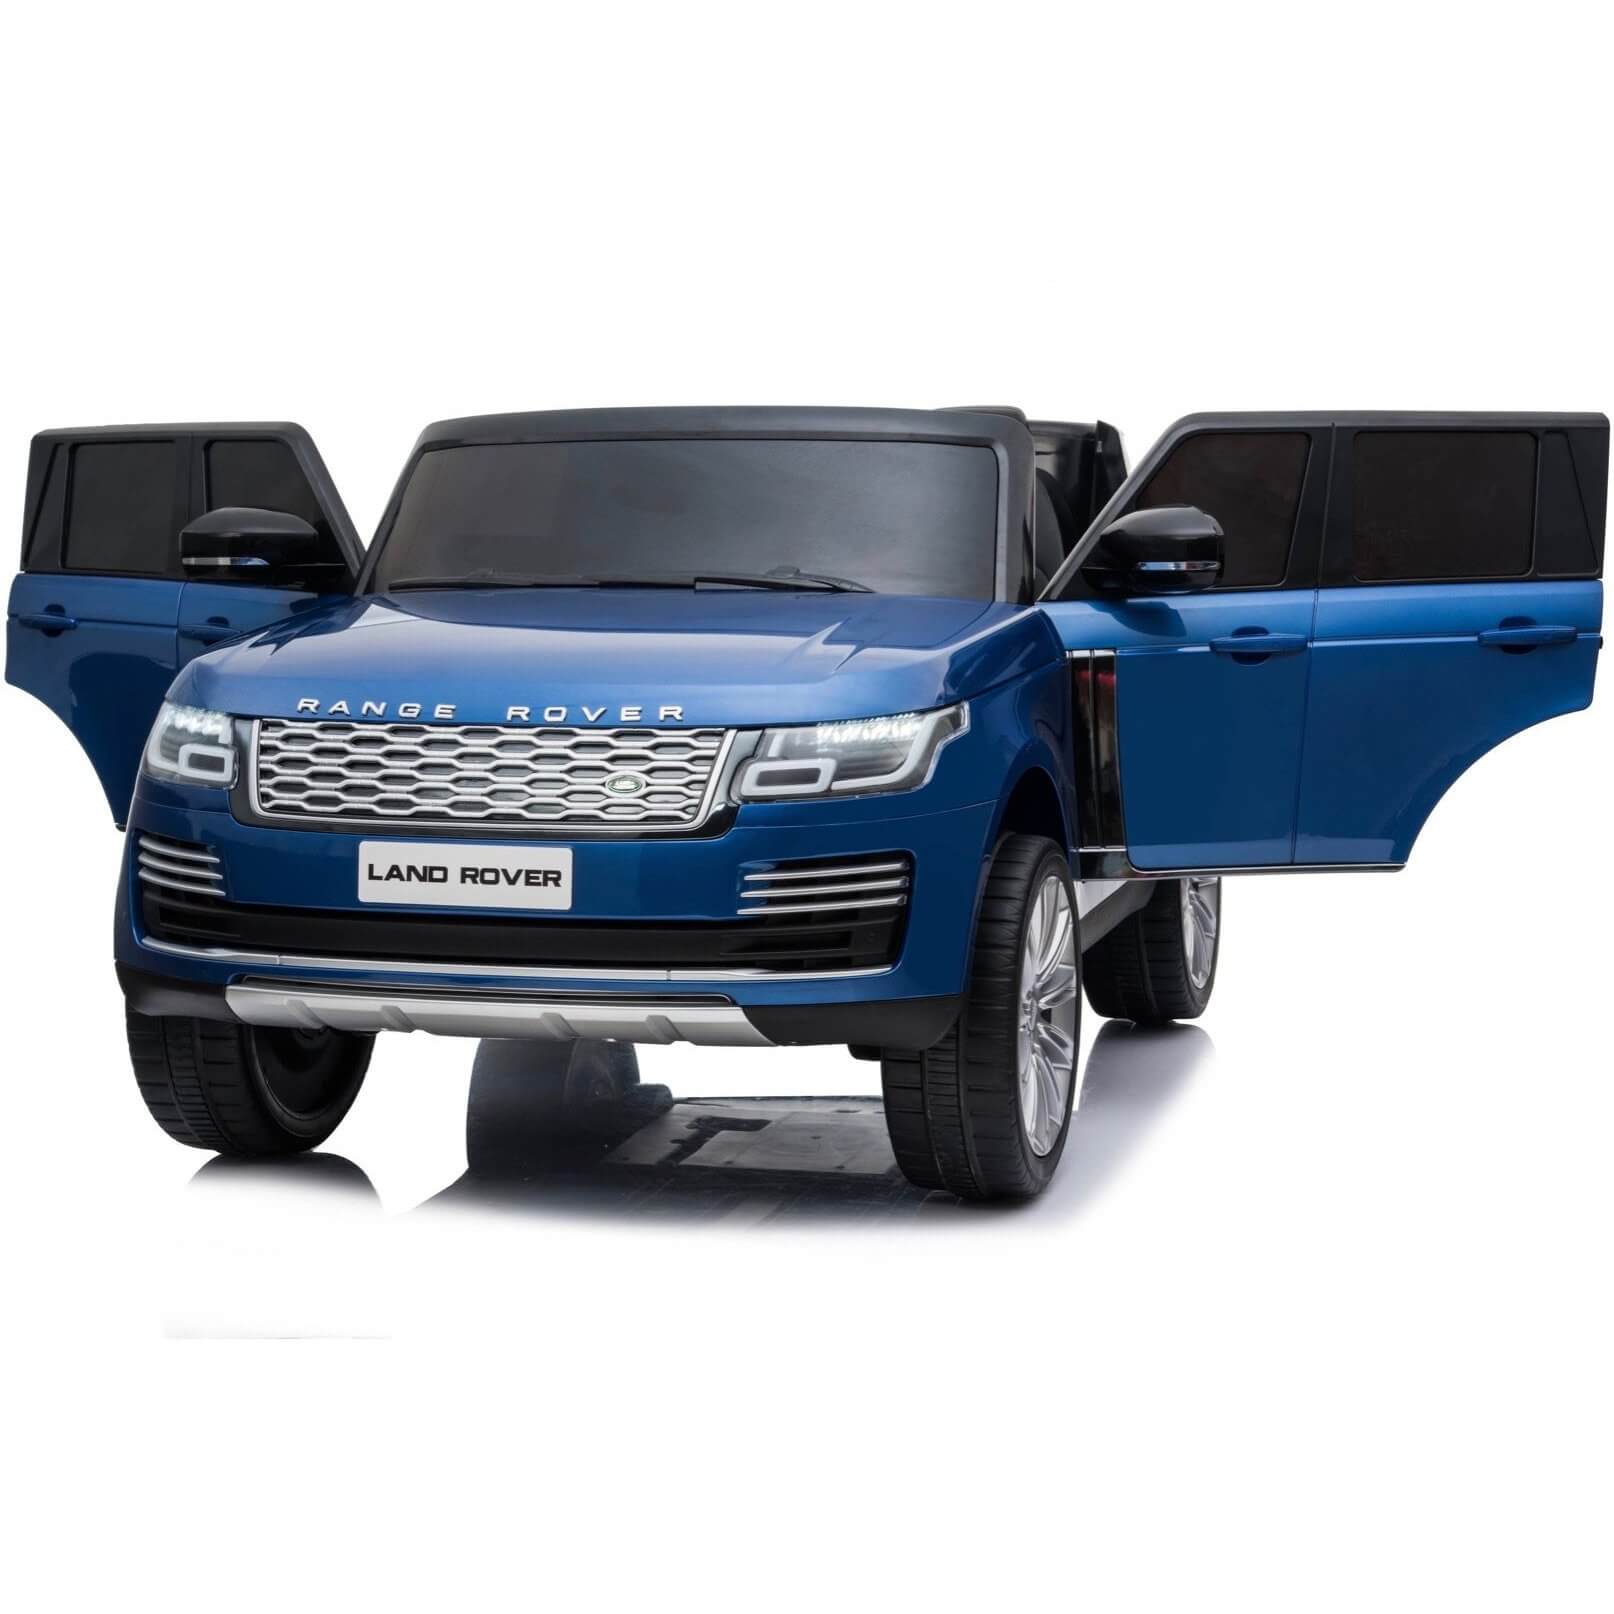 Blue Licensed Toys car Premium Metallic Range Rover Vogue 2 seats for kids 24V